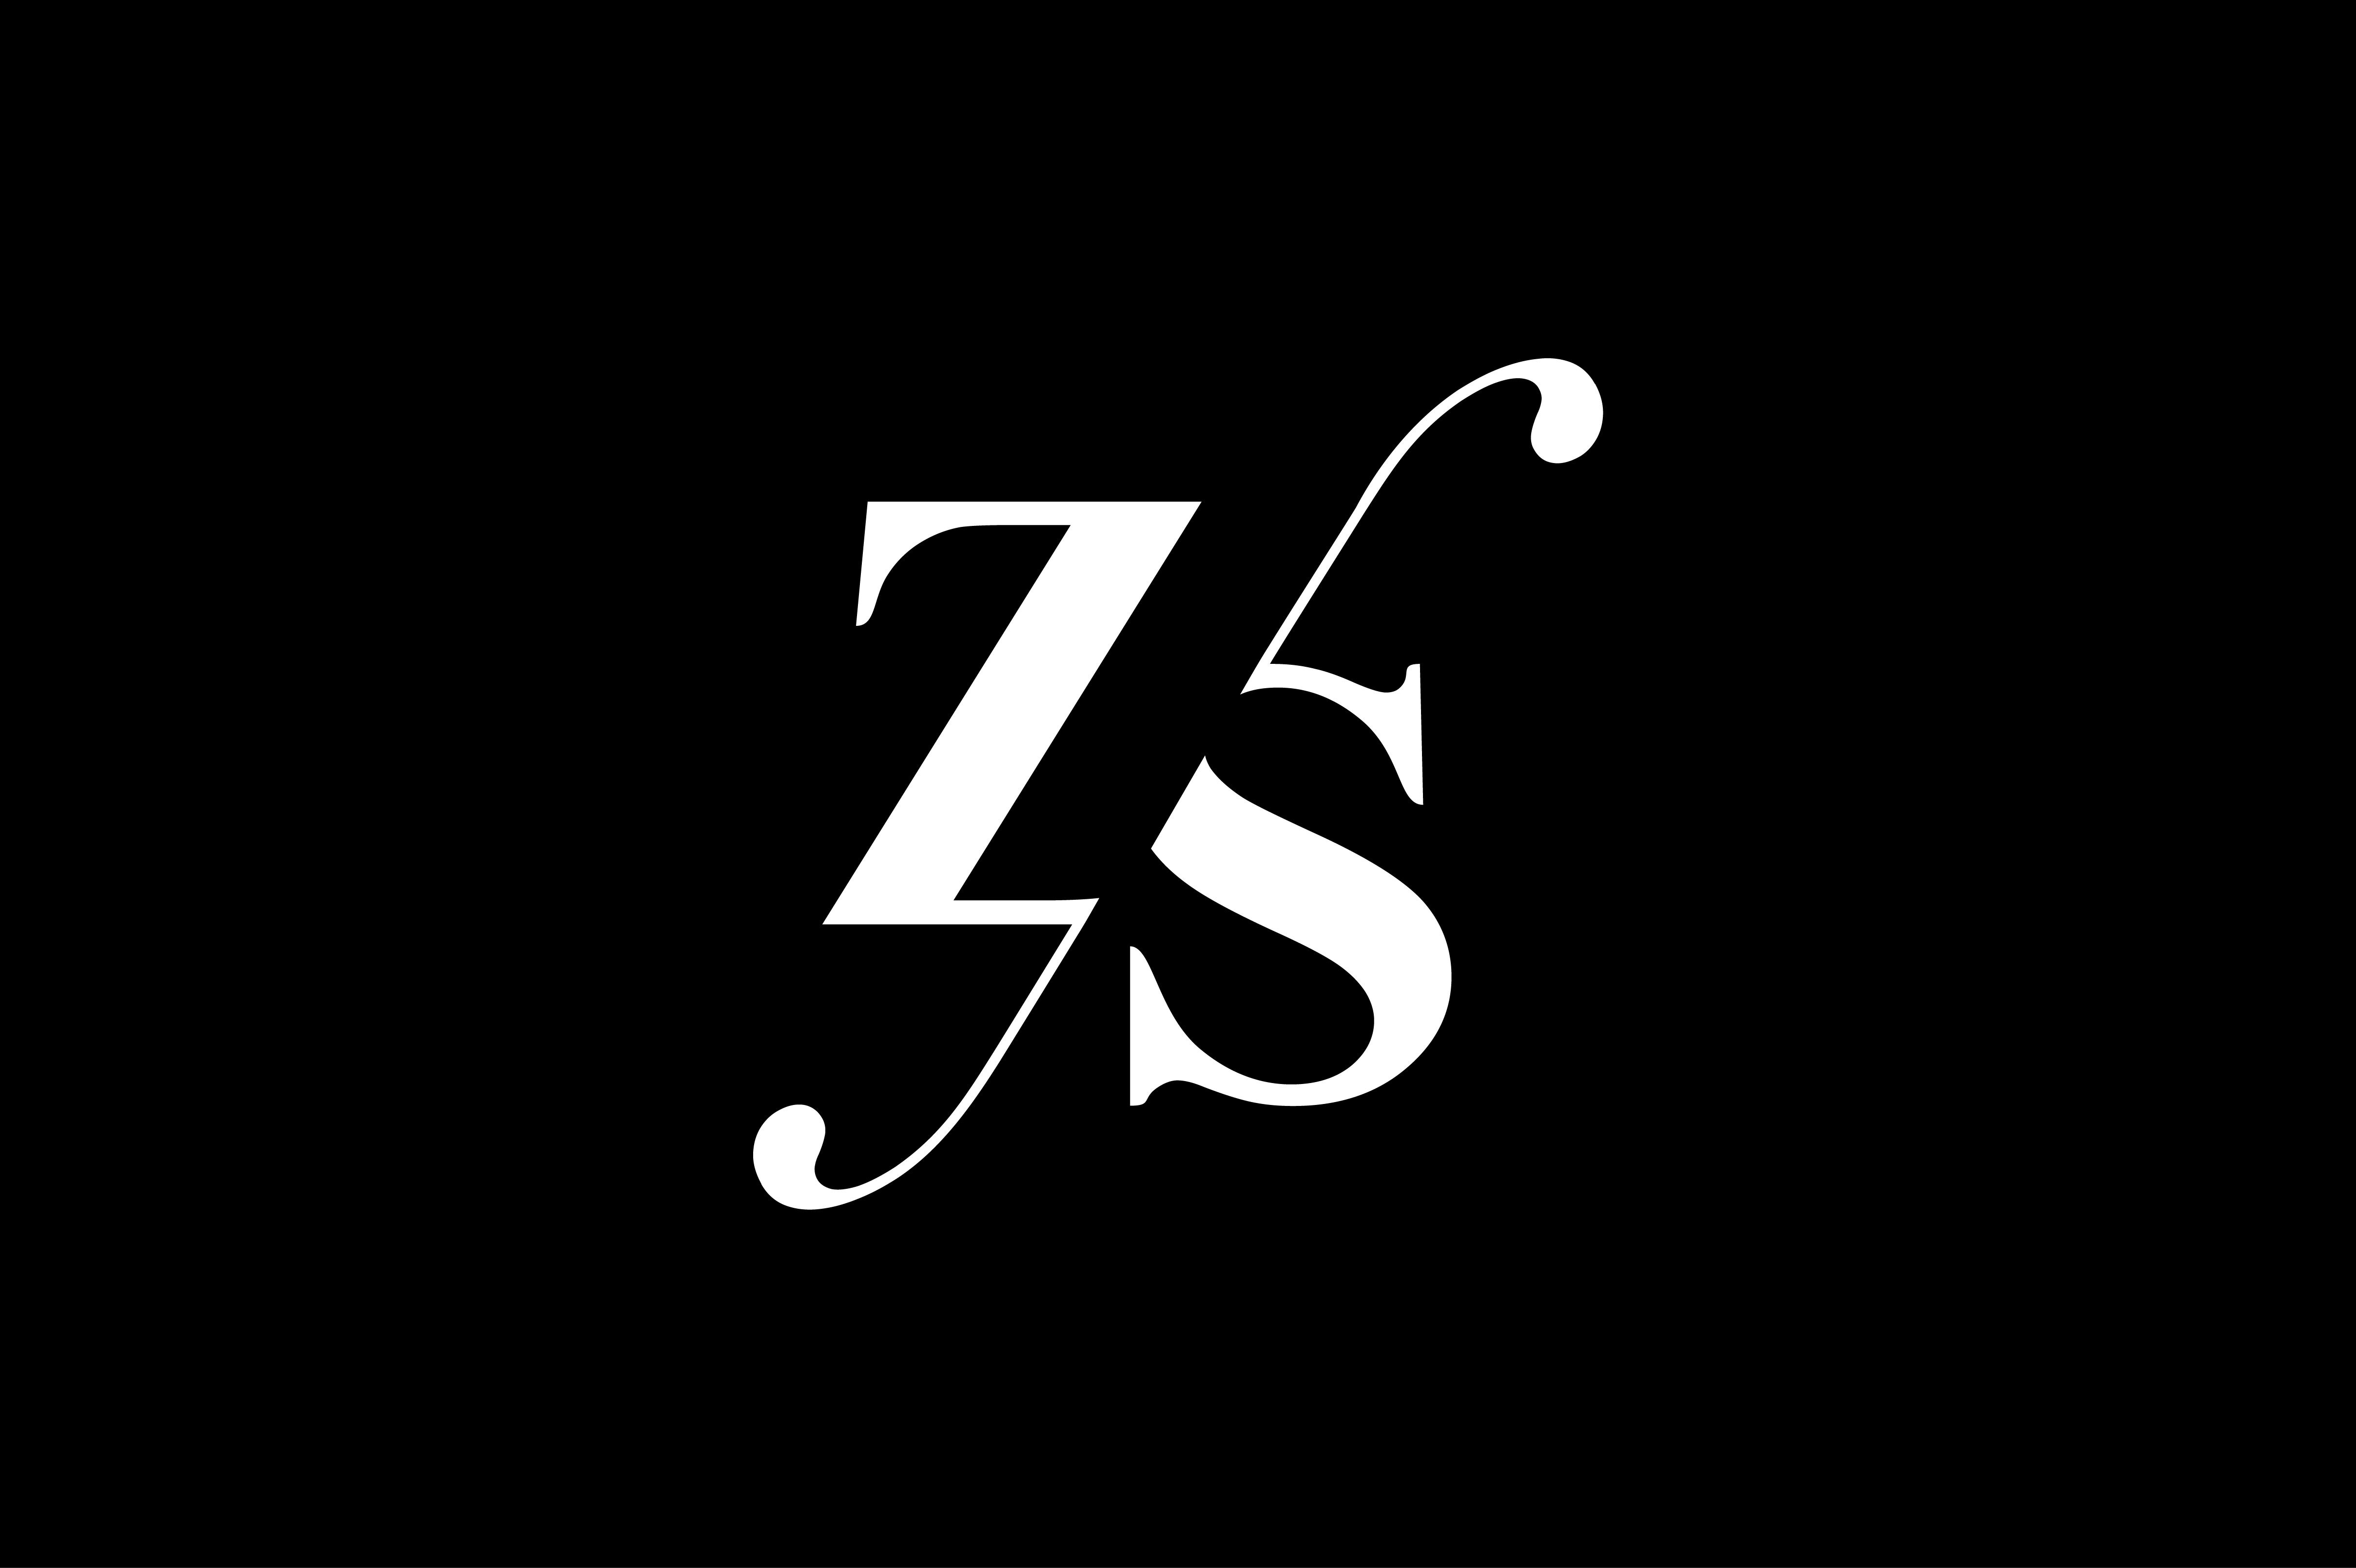 Zs Monogram Logo Design By Vectorseller Thehungryjpeg Com